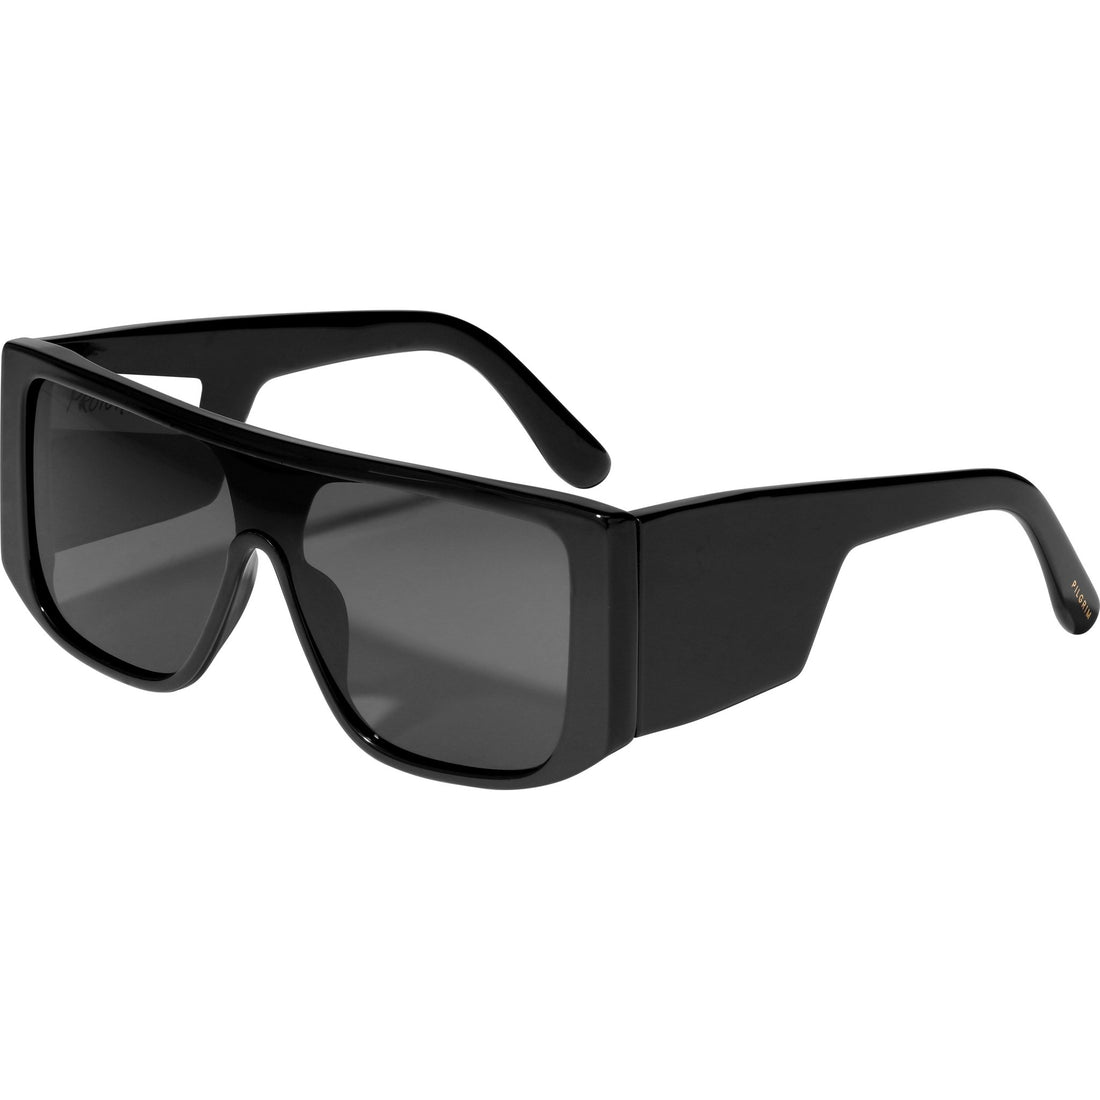 JOHARI recycled sunglasses black - PILGRIM